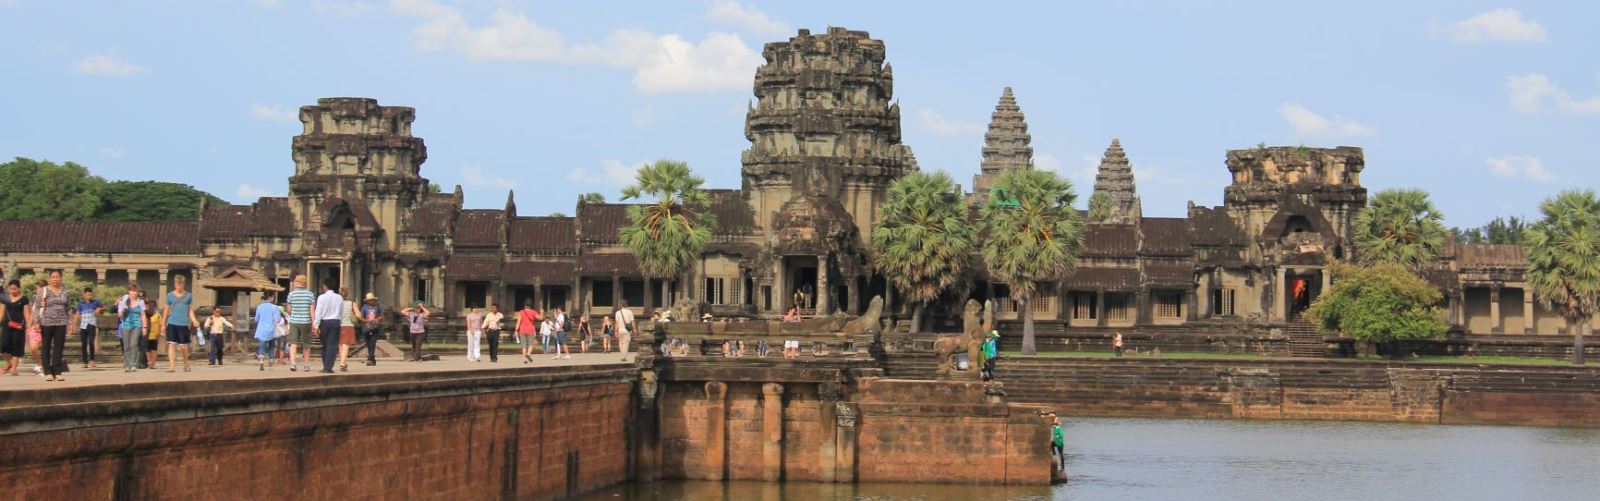 Cambodia Travel |Cambodia Tours |Cambodia Private tours | ilotustours